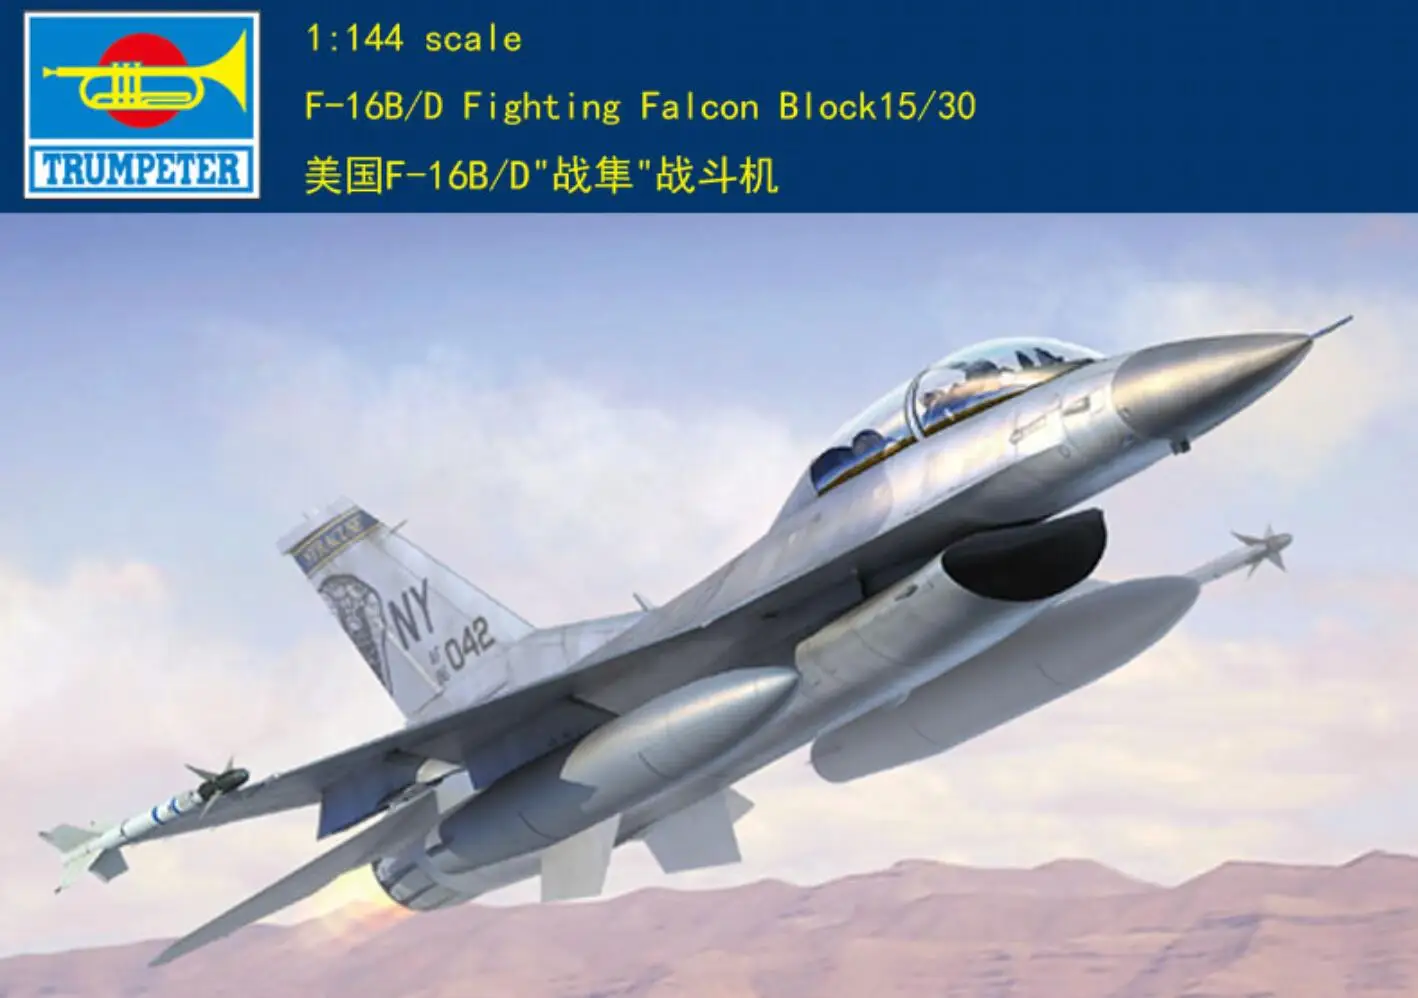 

Trumpeter 1/144 03920 F-16B/D Fighting Falcon Block15/30 Model Airplane Kit